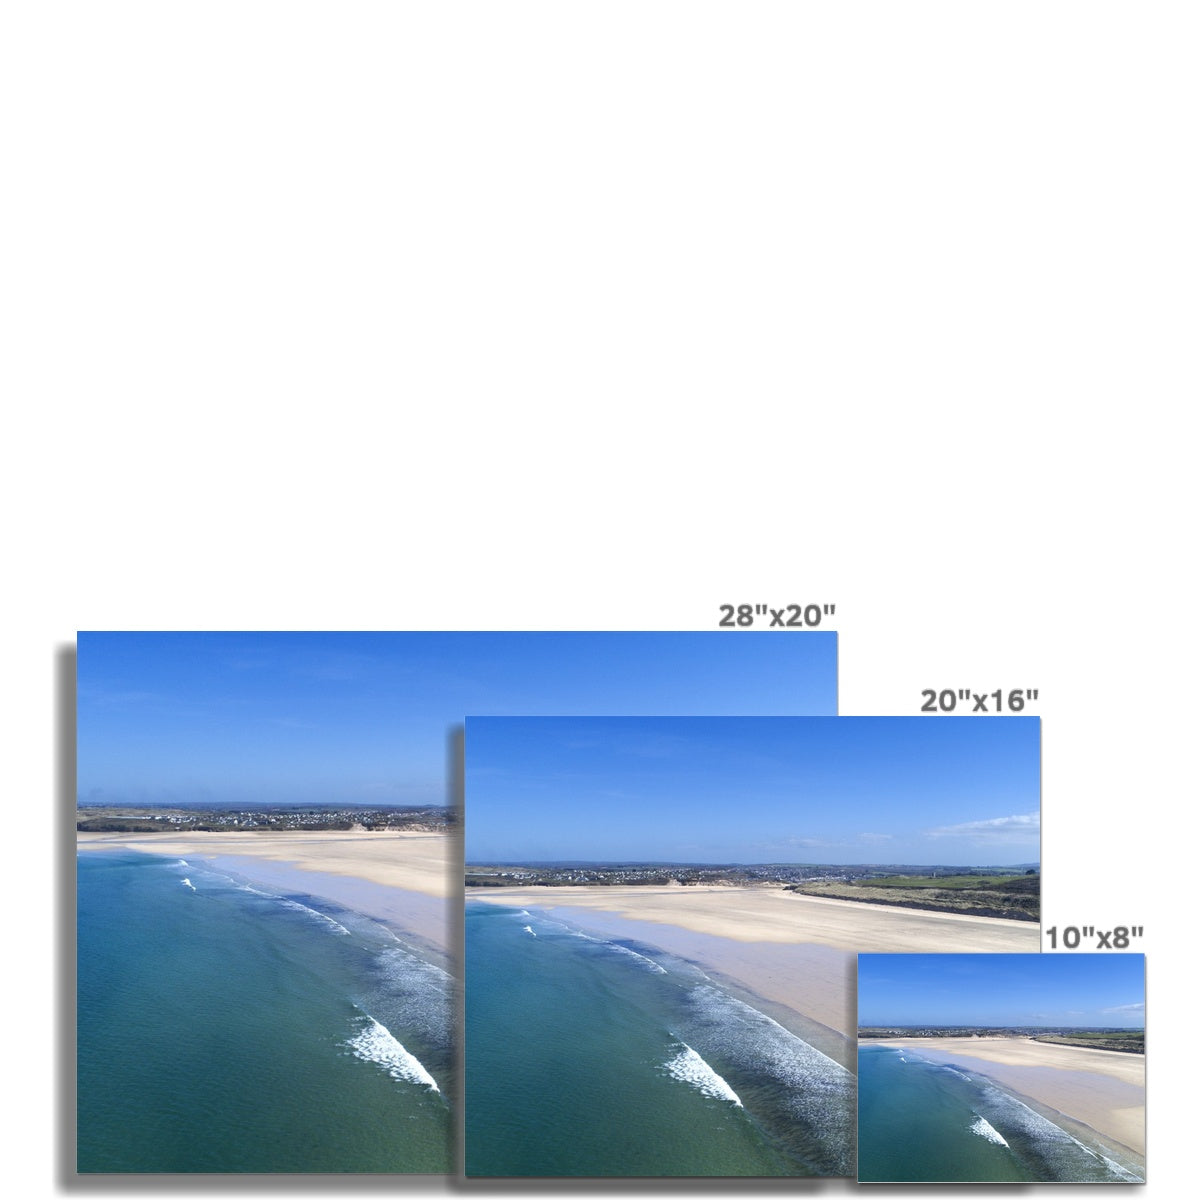 porthkidney beach picture sizes